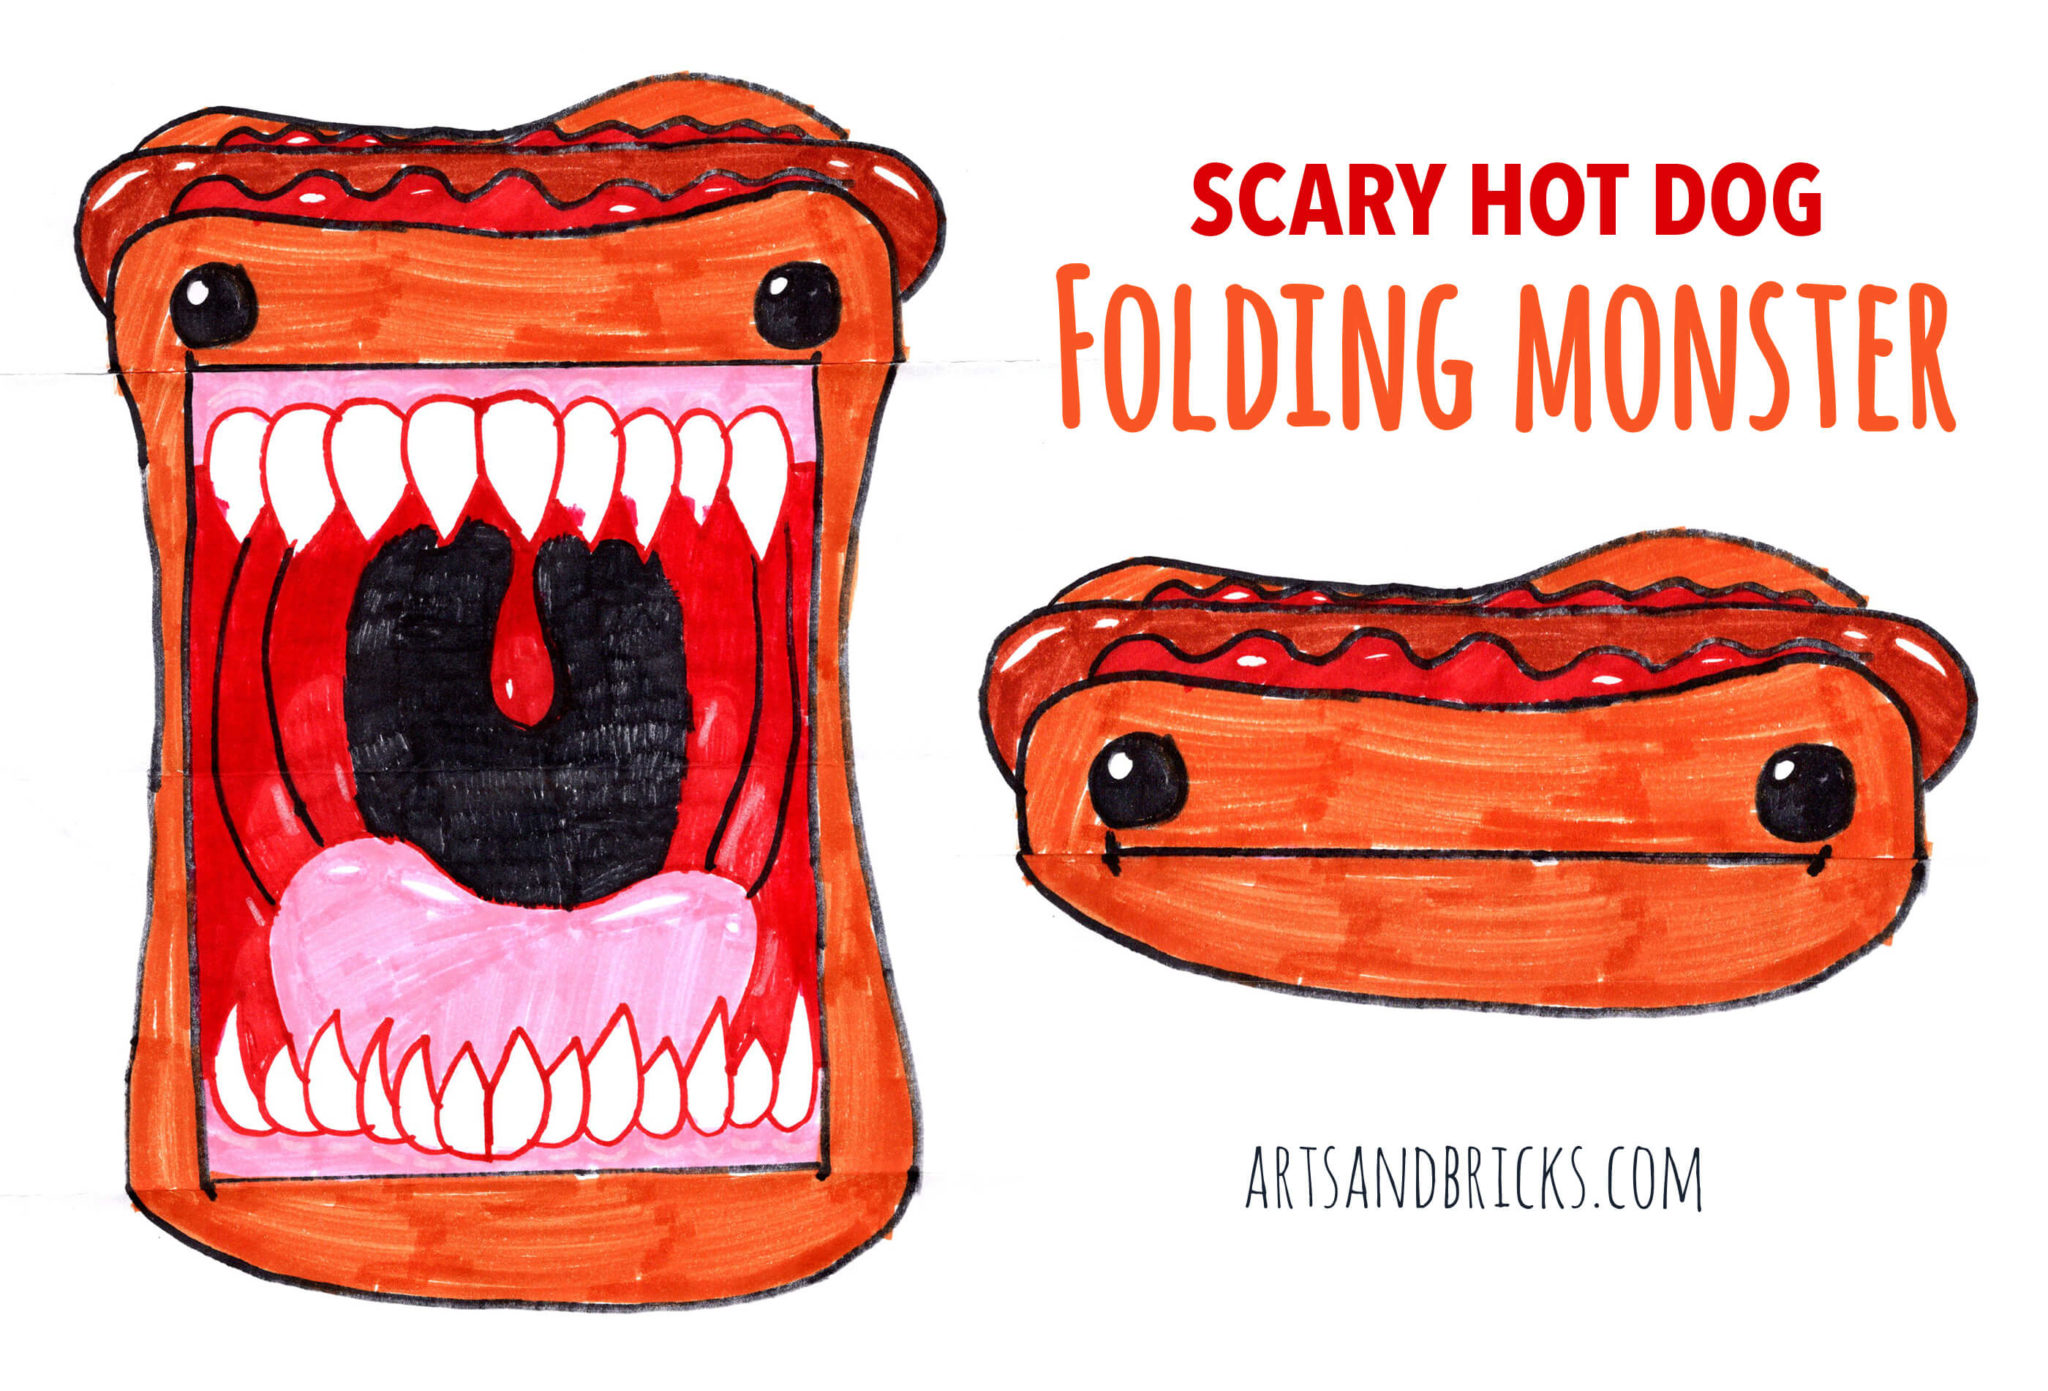 Food Folding Surprise "Monster" Drawings Arts and Bricks